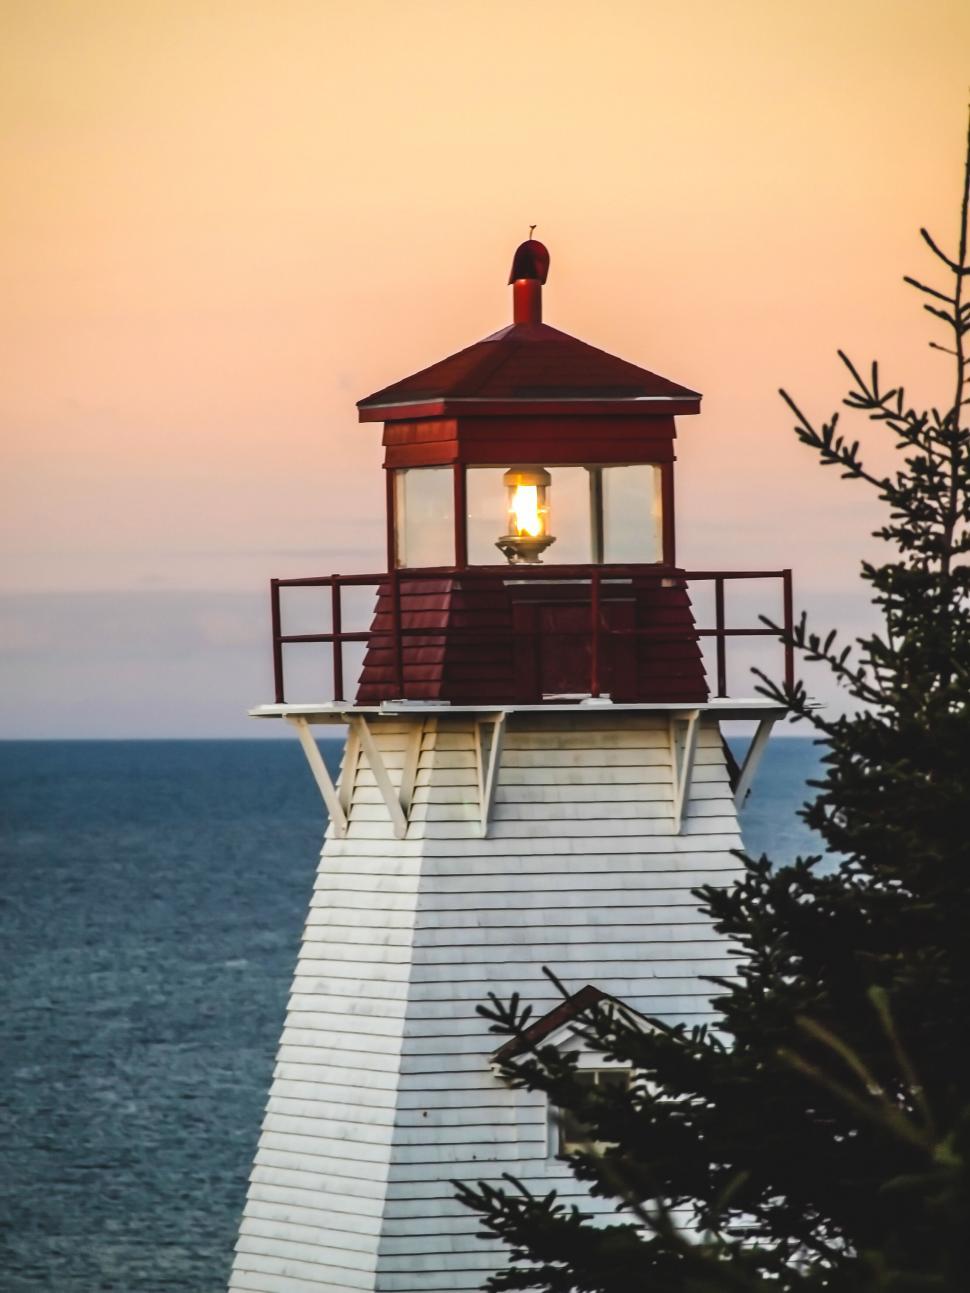 Free Image of Coastal lighthouse at sunset with trees 